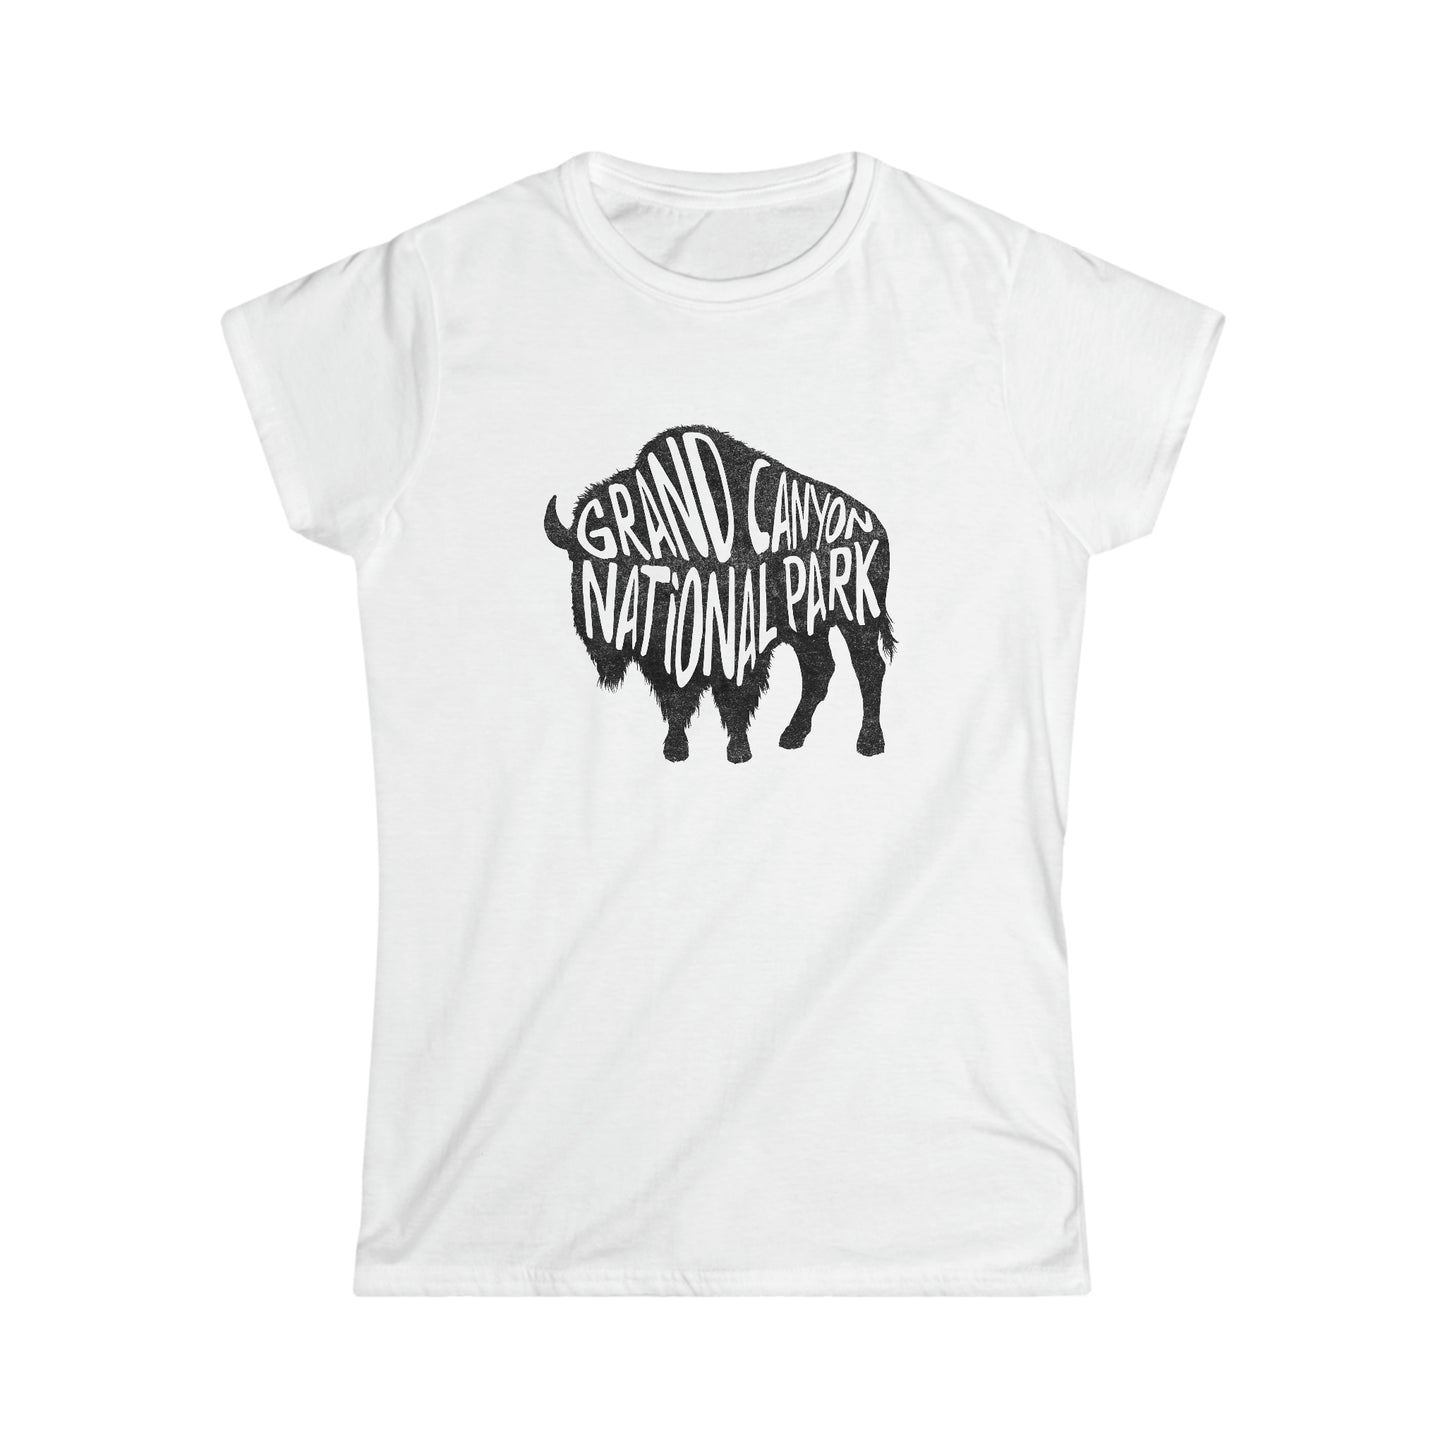 Grand Canyon National Park Women's T-Shirt - Bison